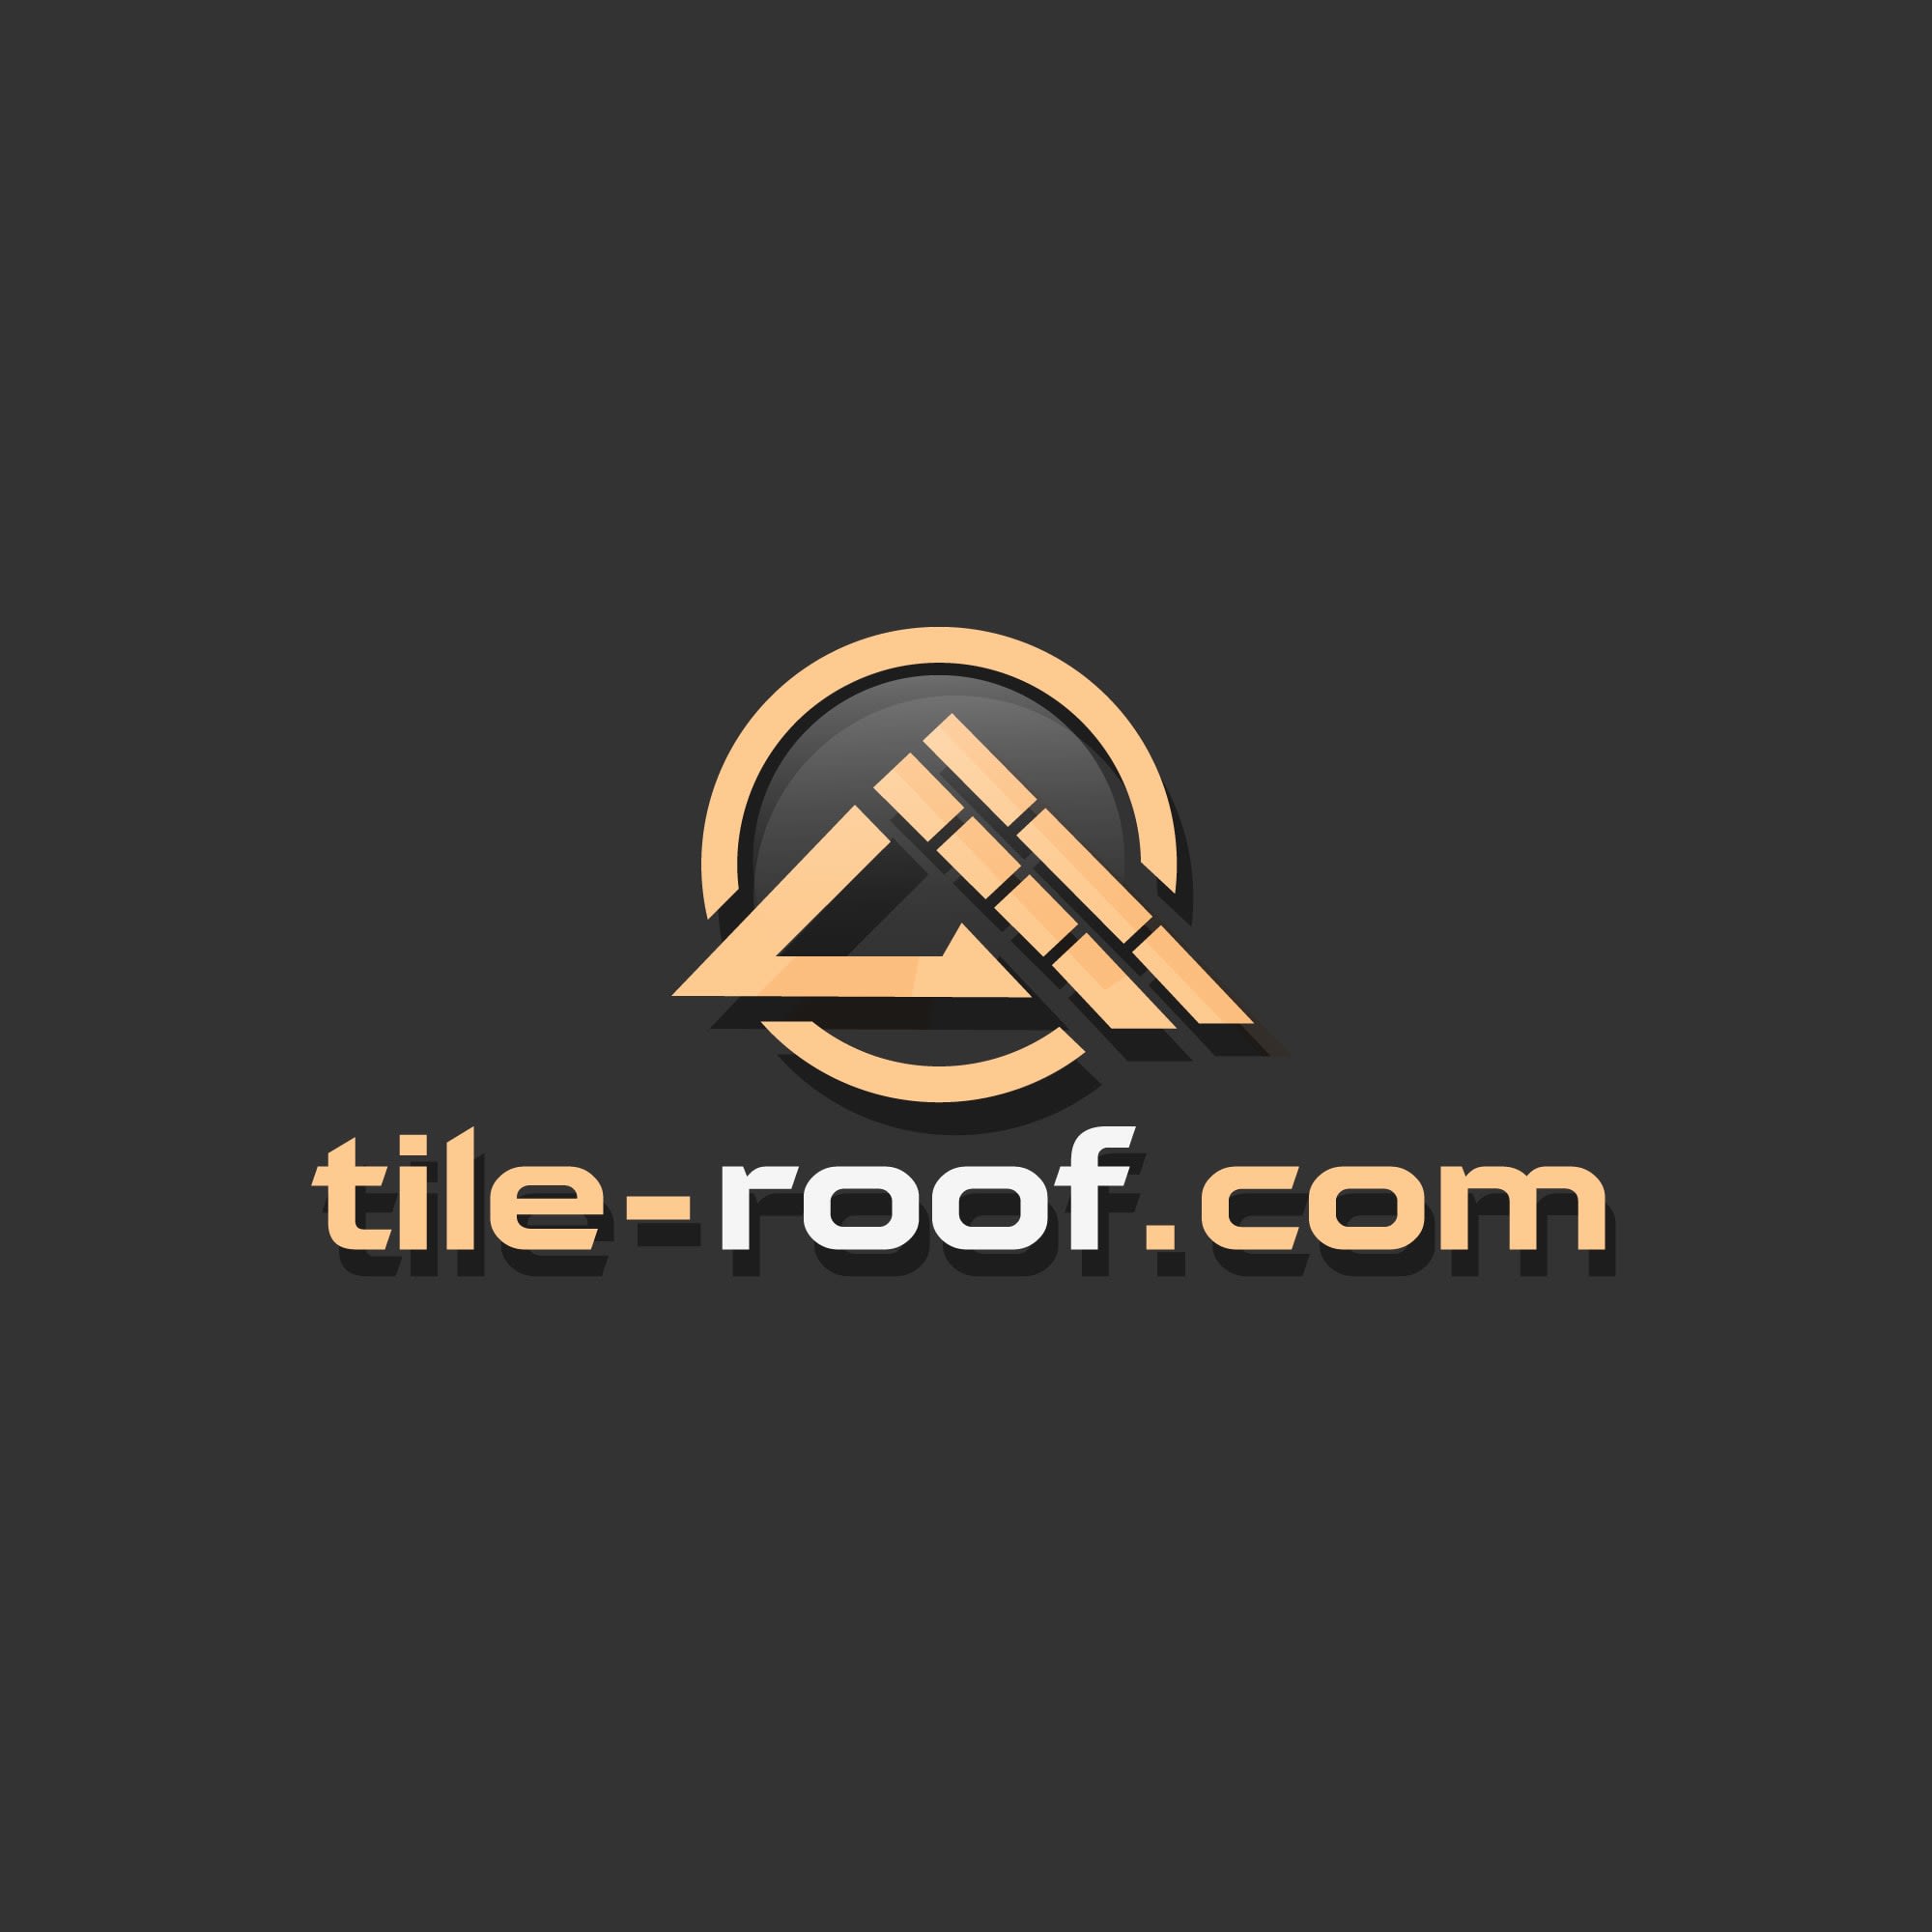 tile-roof.com